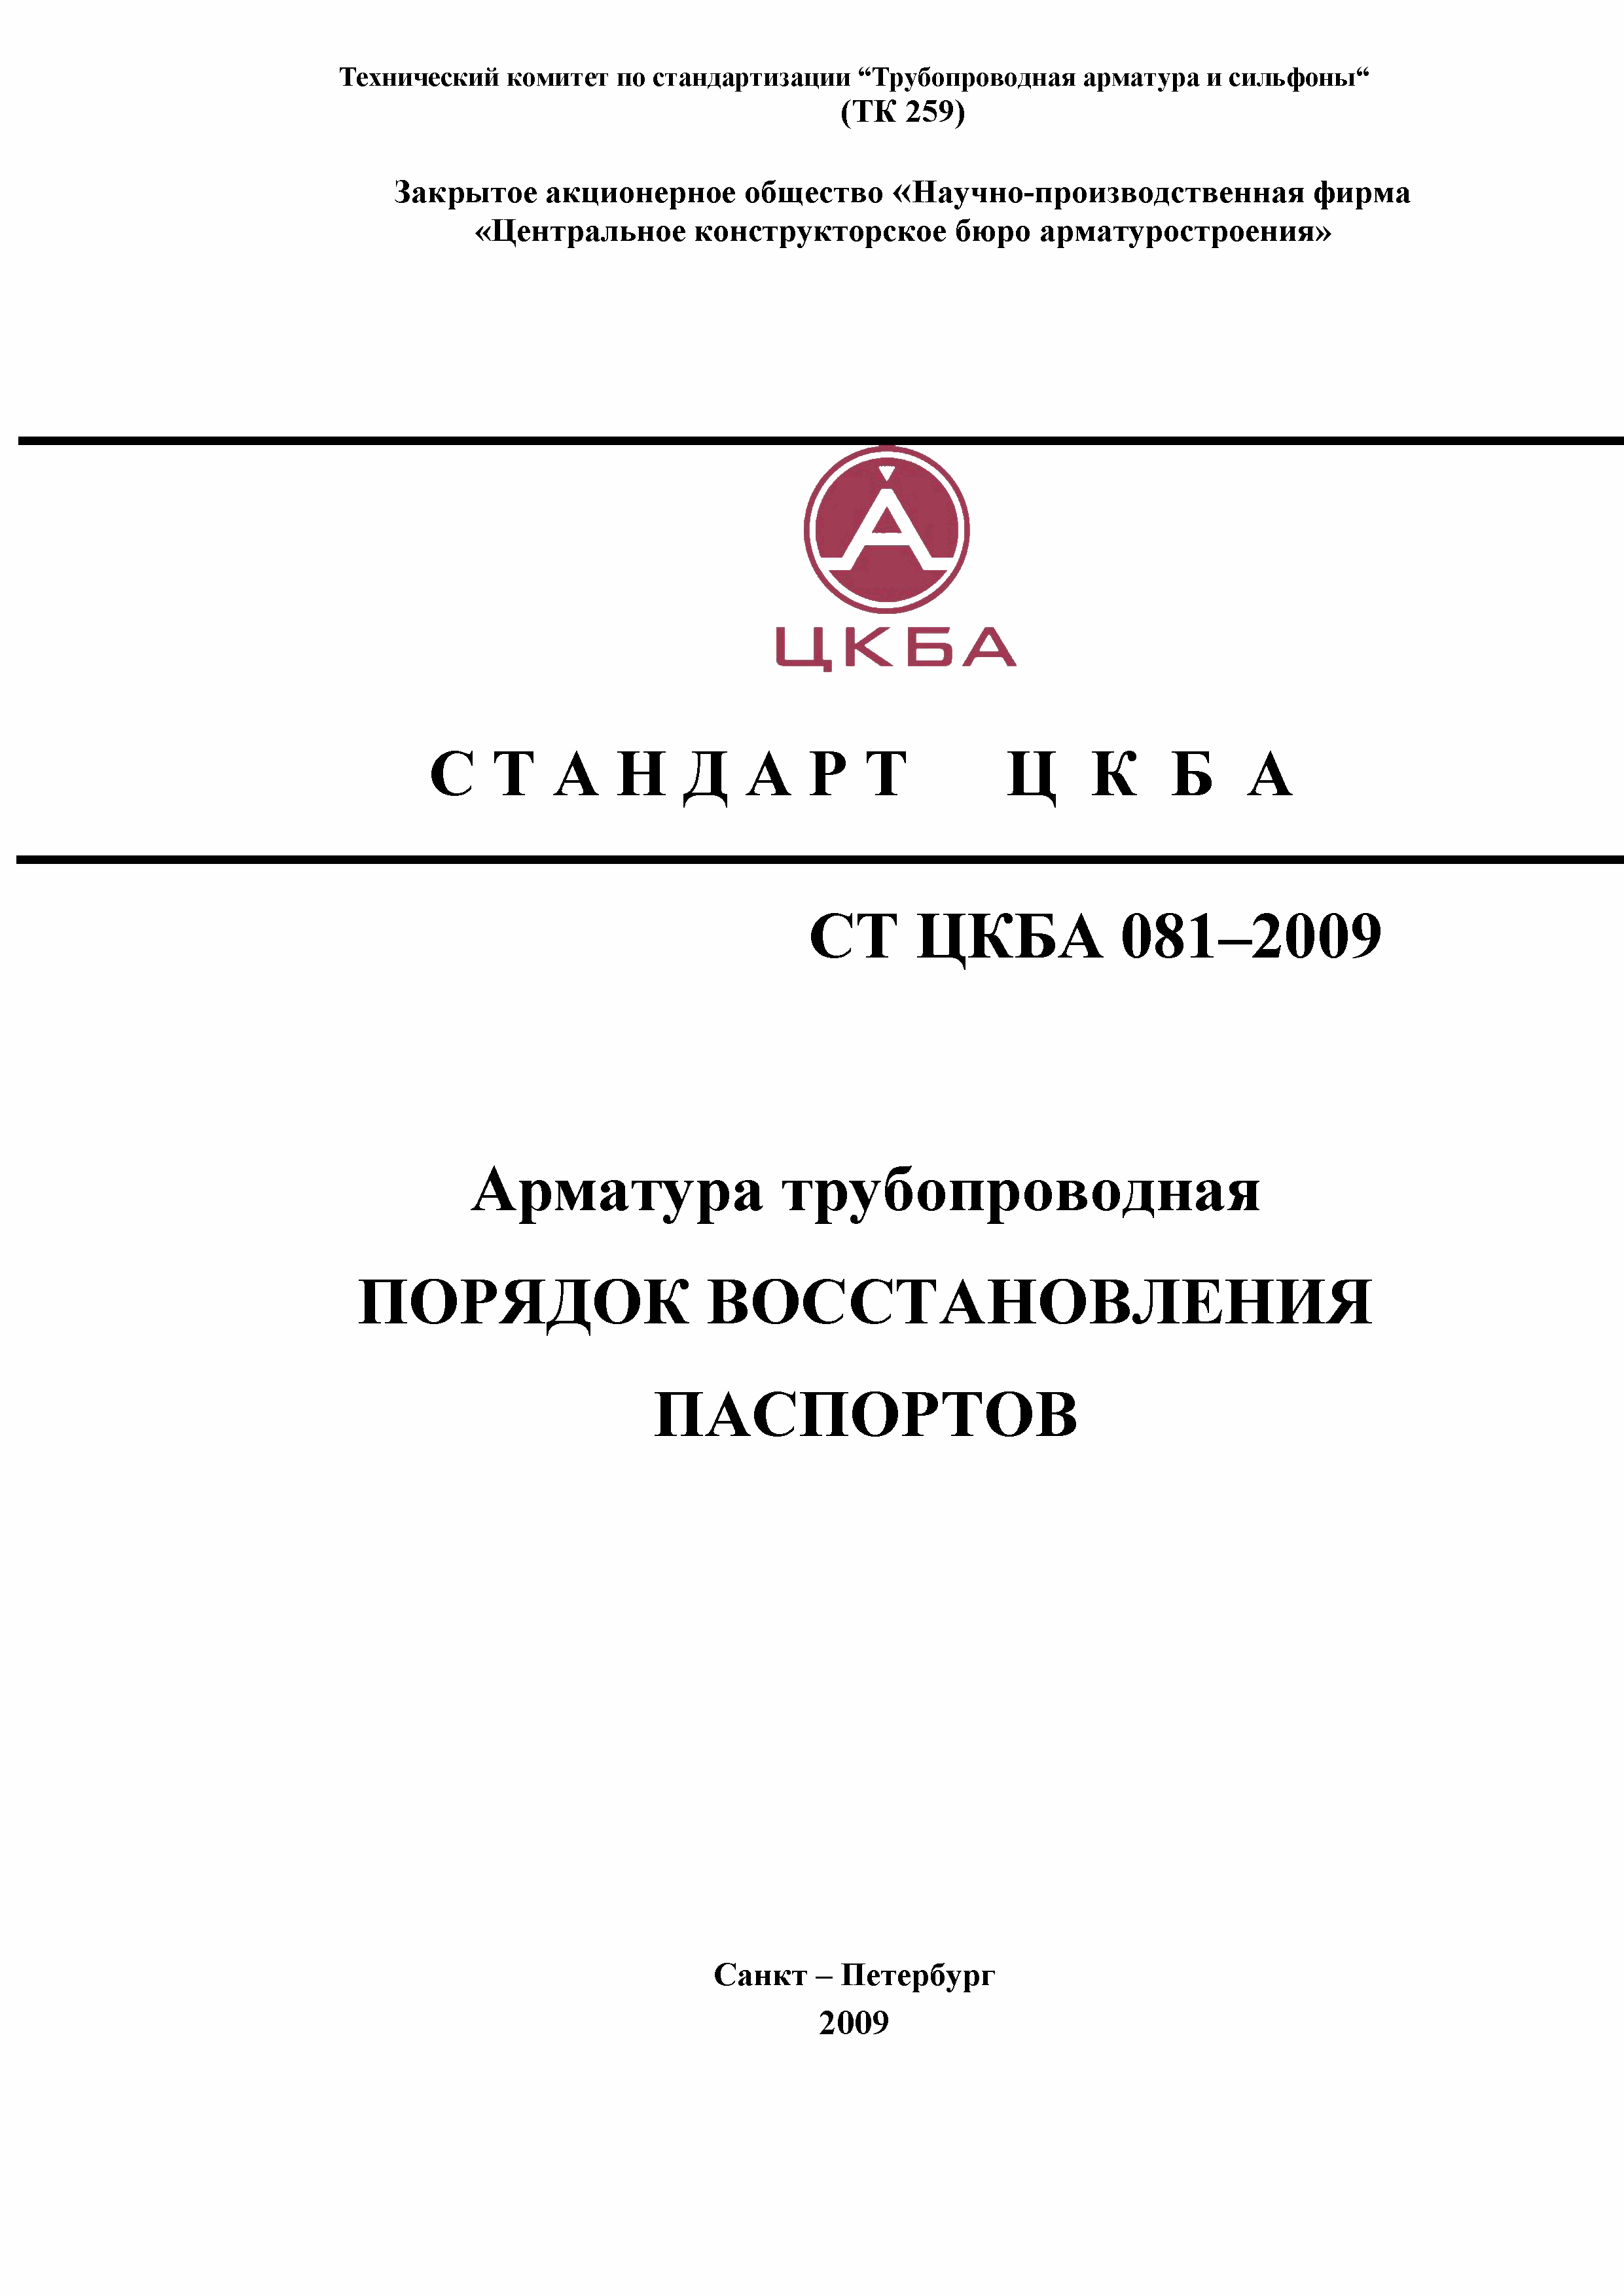 СТ ЦКБА 081-2009